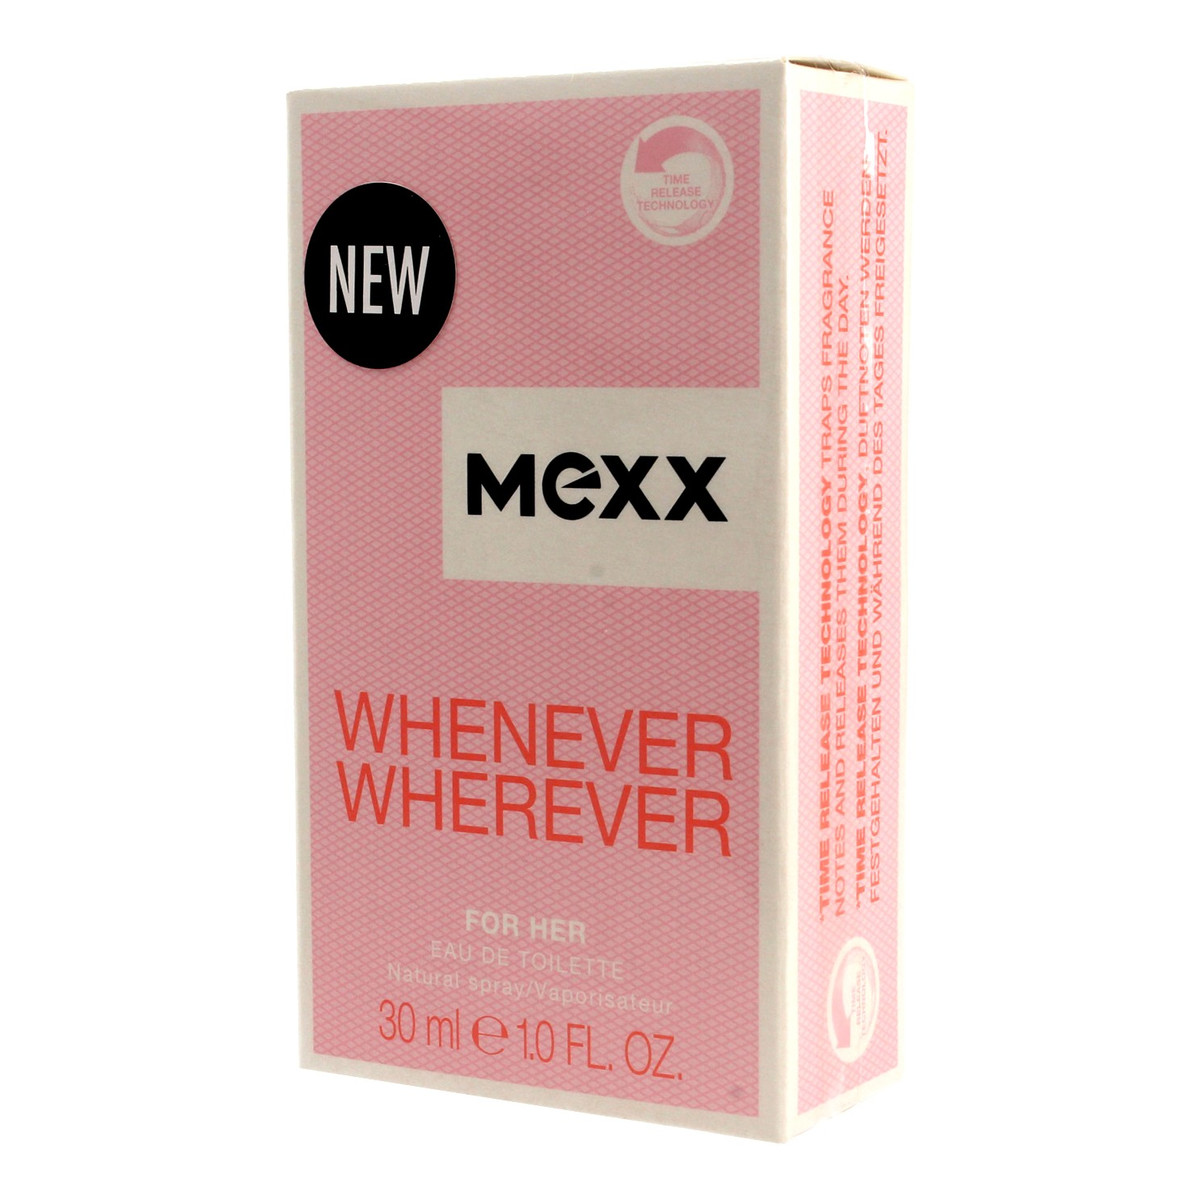 Mexx Whenever Wherever for Her Woda toaletowa 30ml